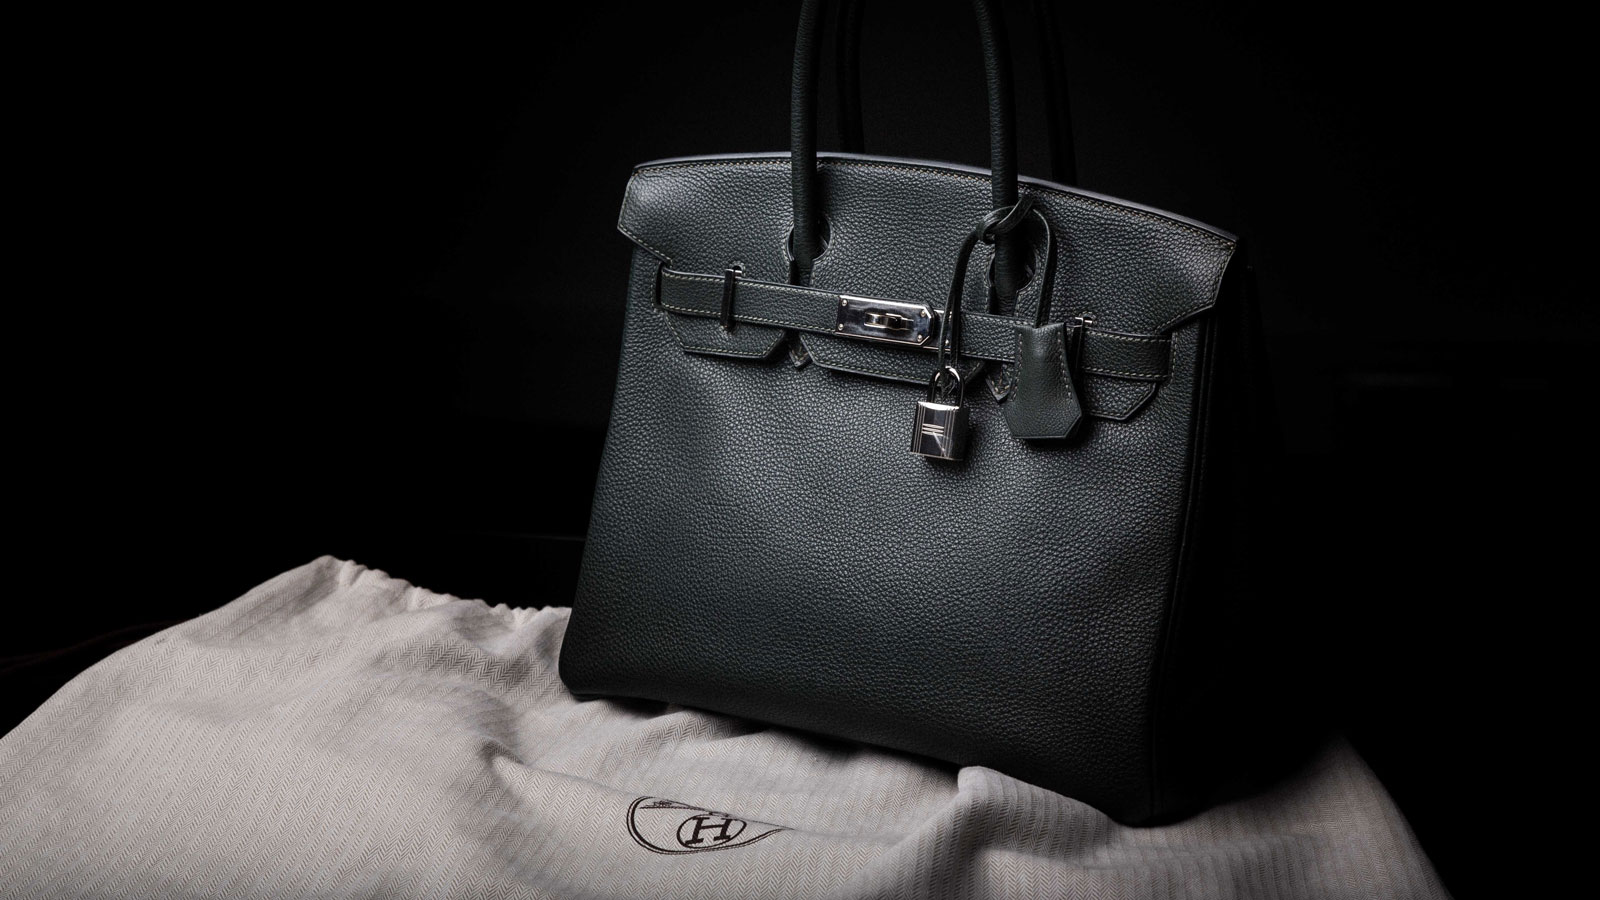 Is having luxury bags, materialistic?